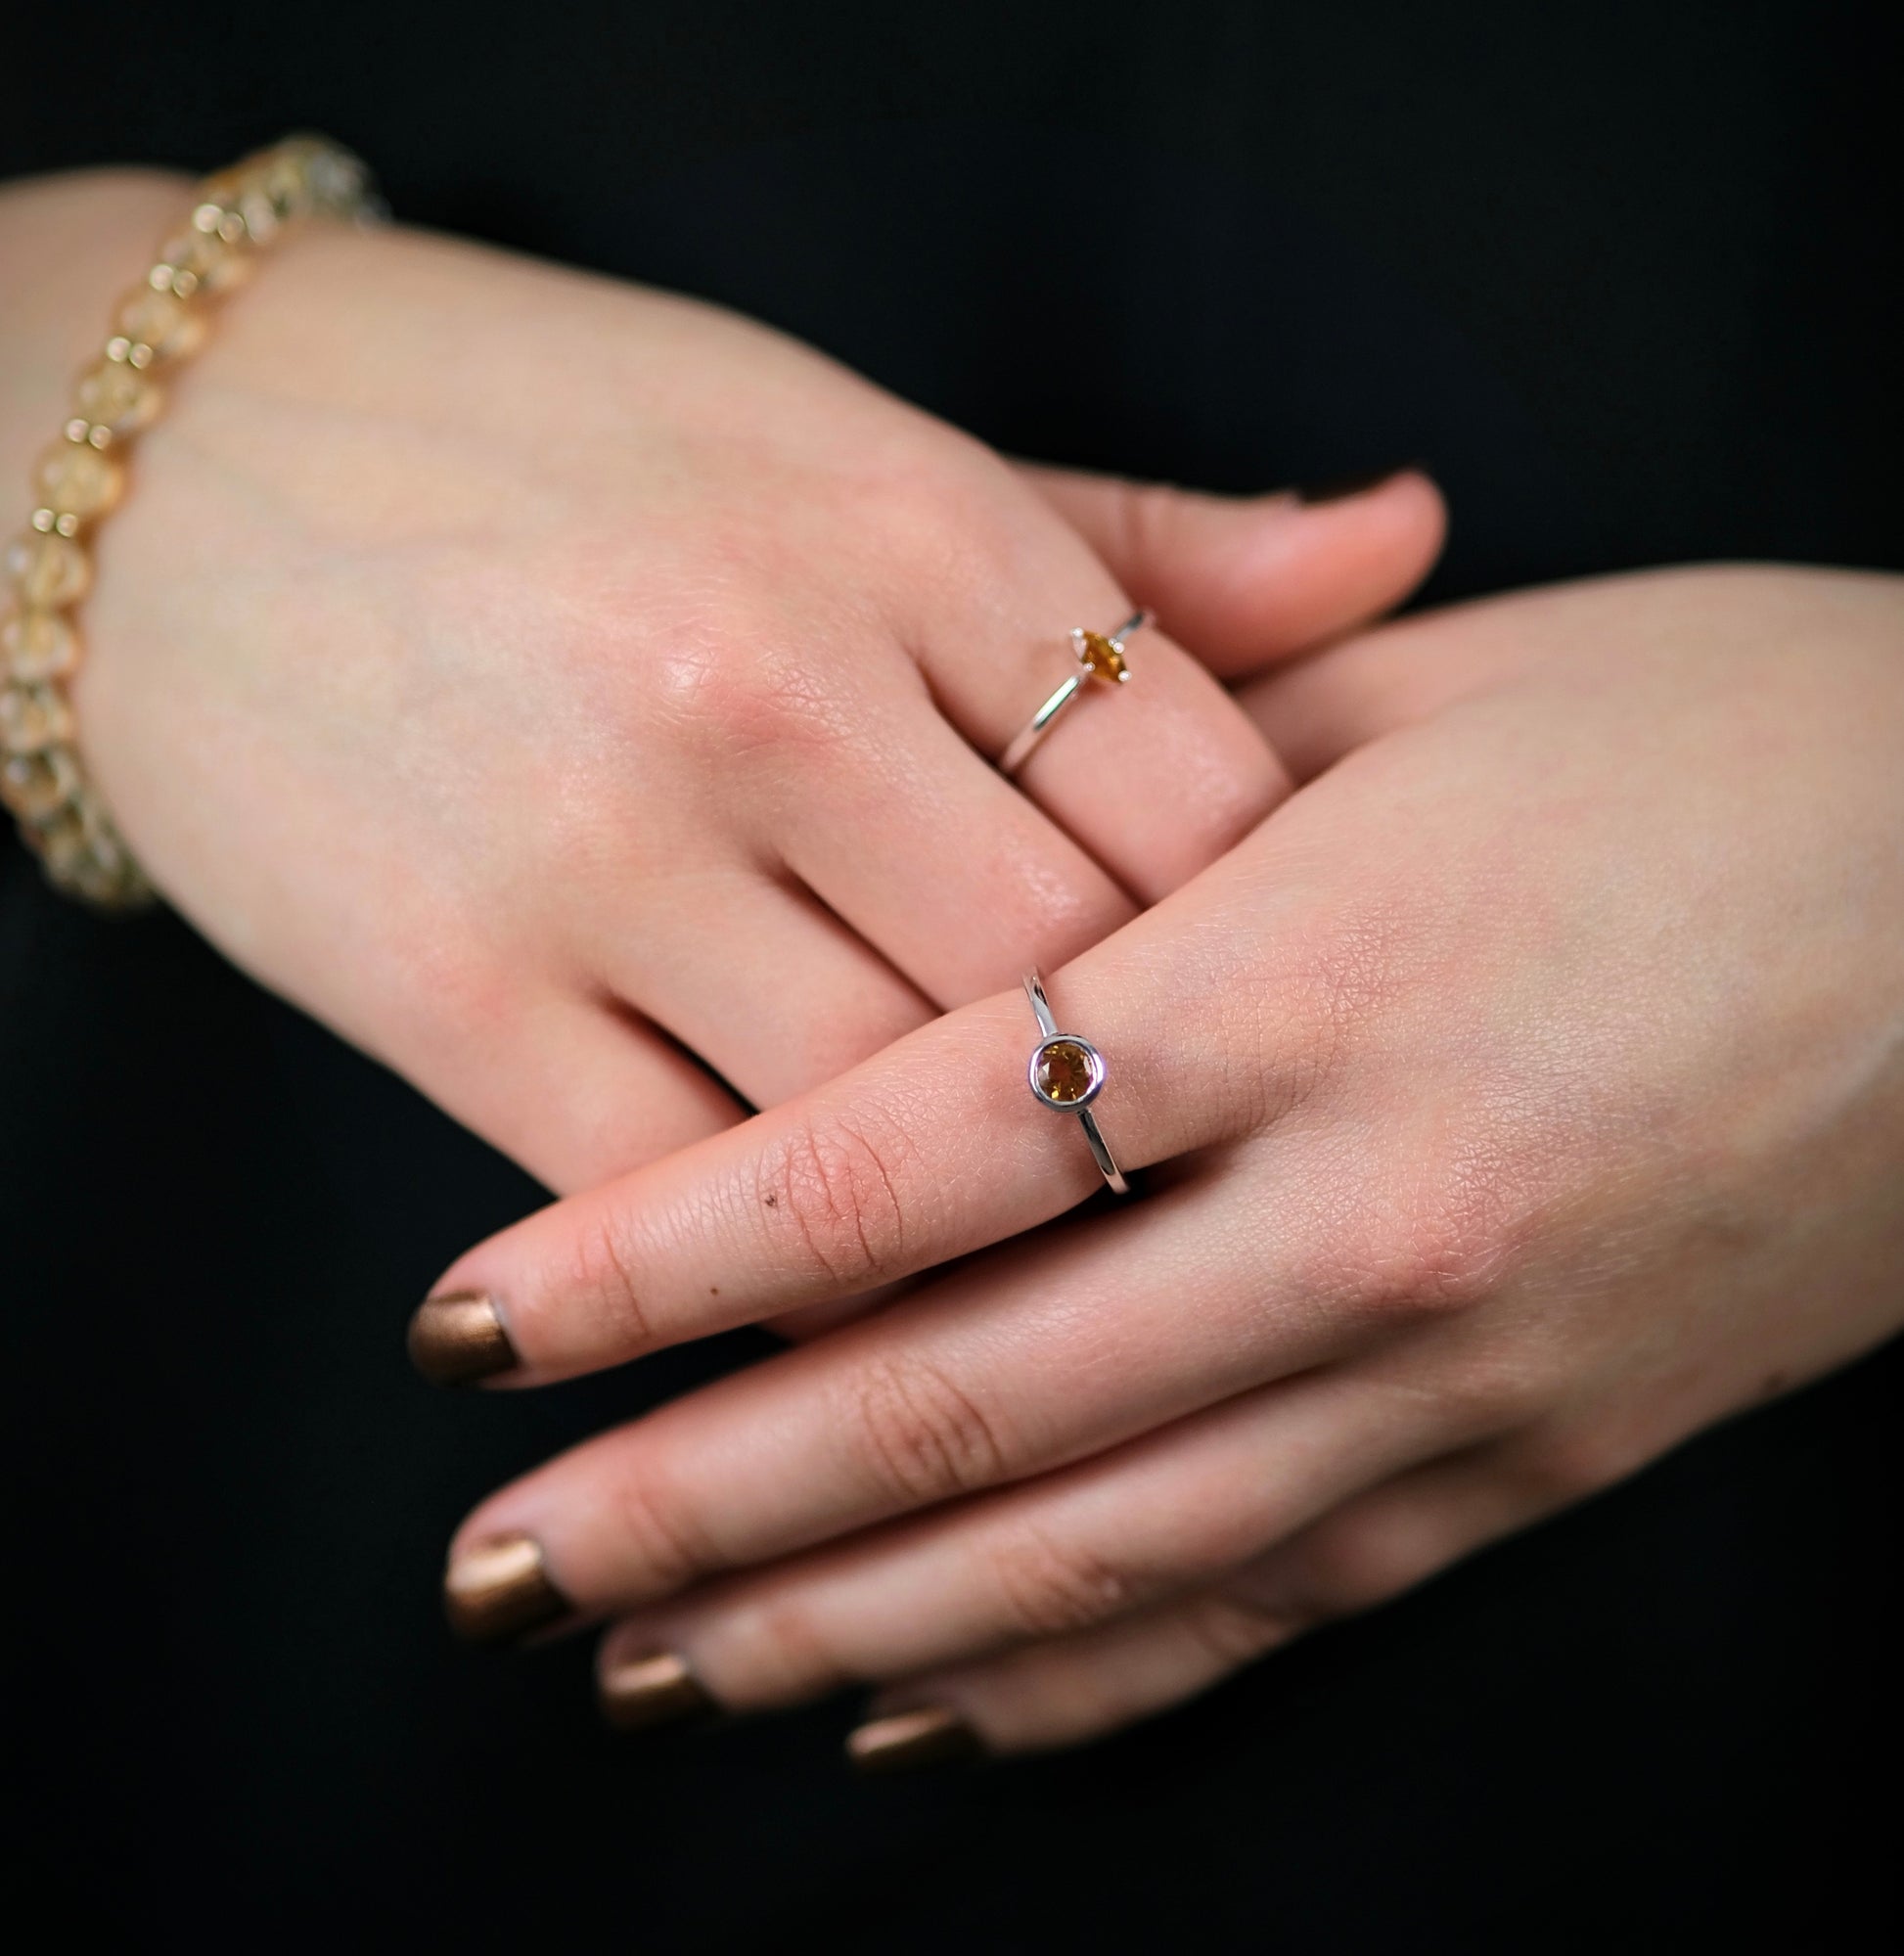 A model wearing two citrine gemstone rings